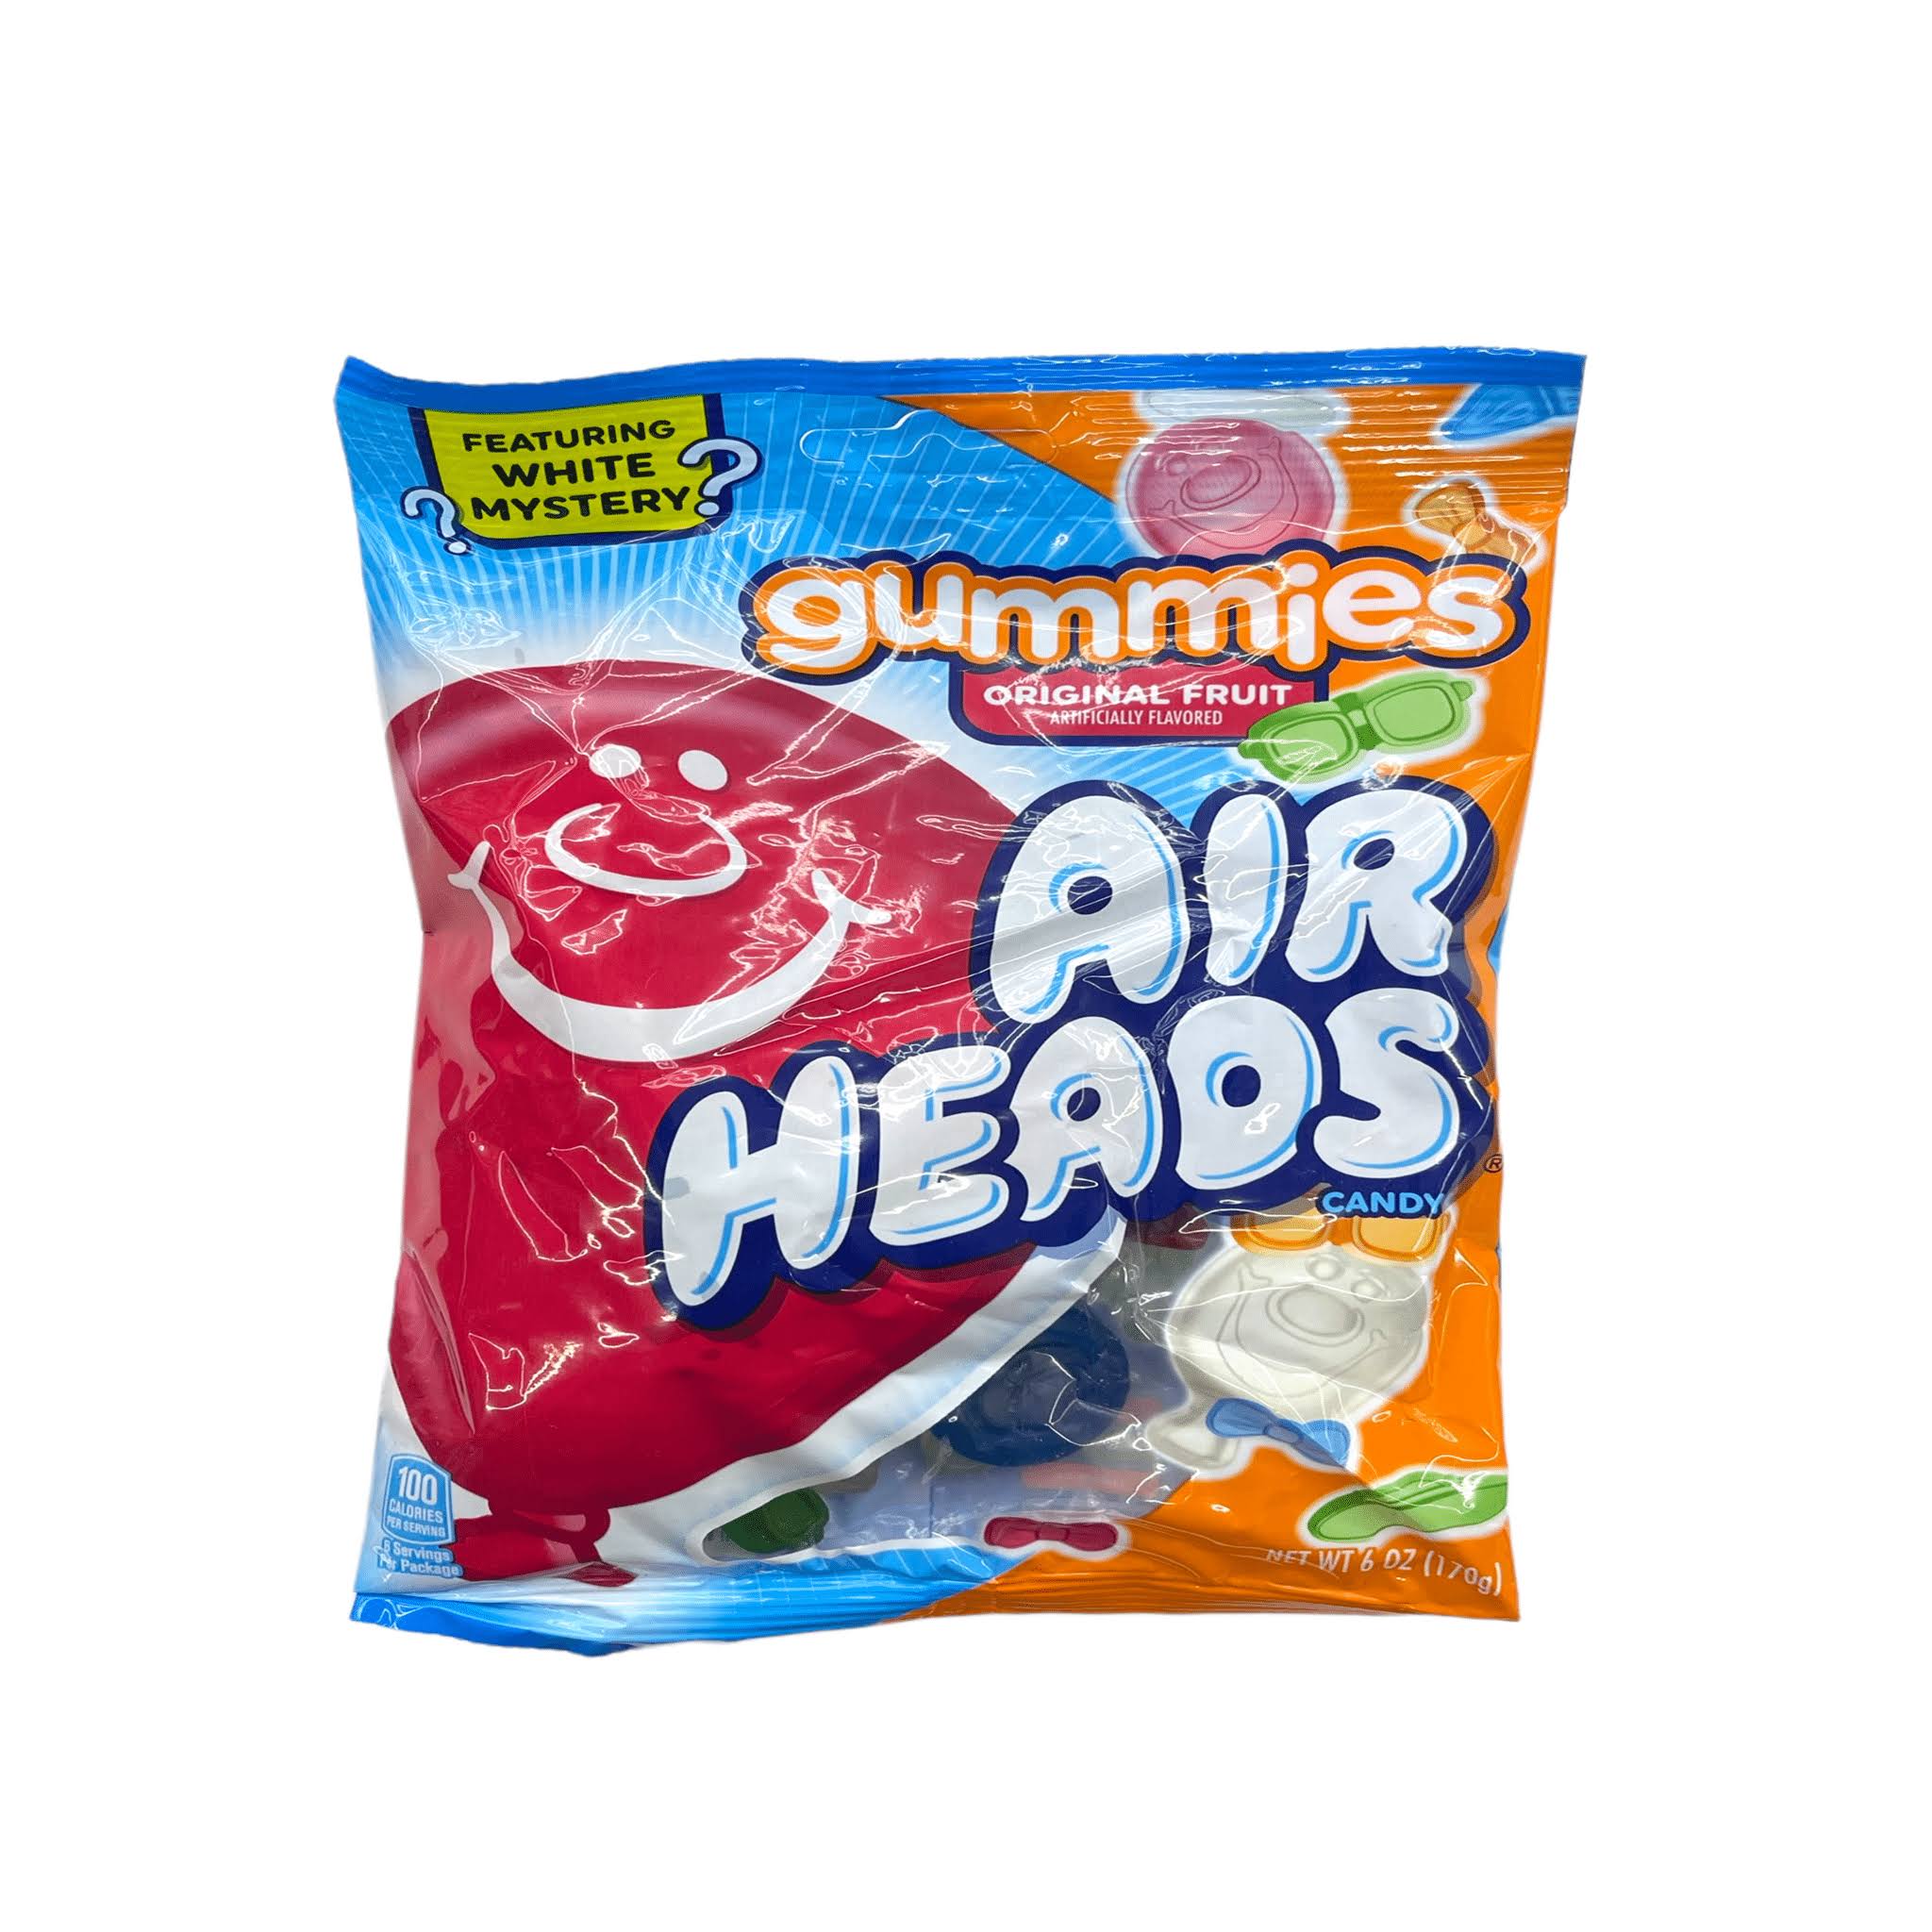 Airheads - Gummies Original Fruit Candy, 6 oz.